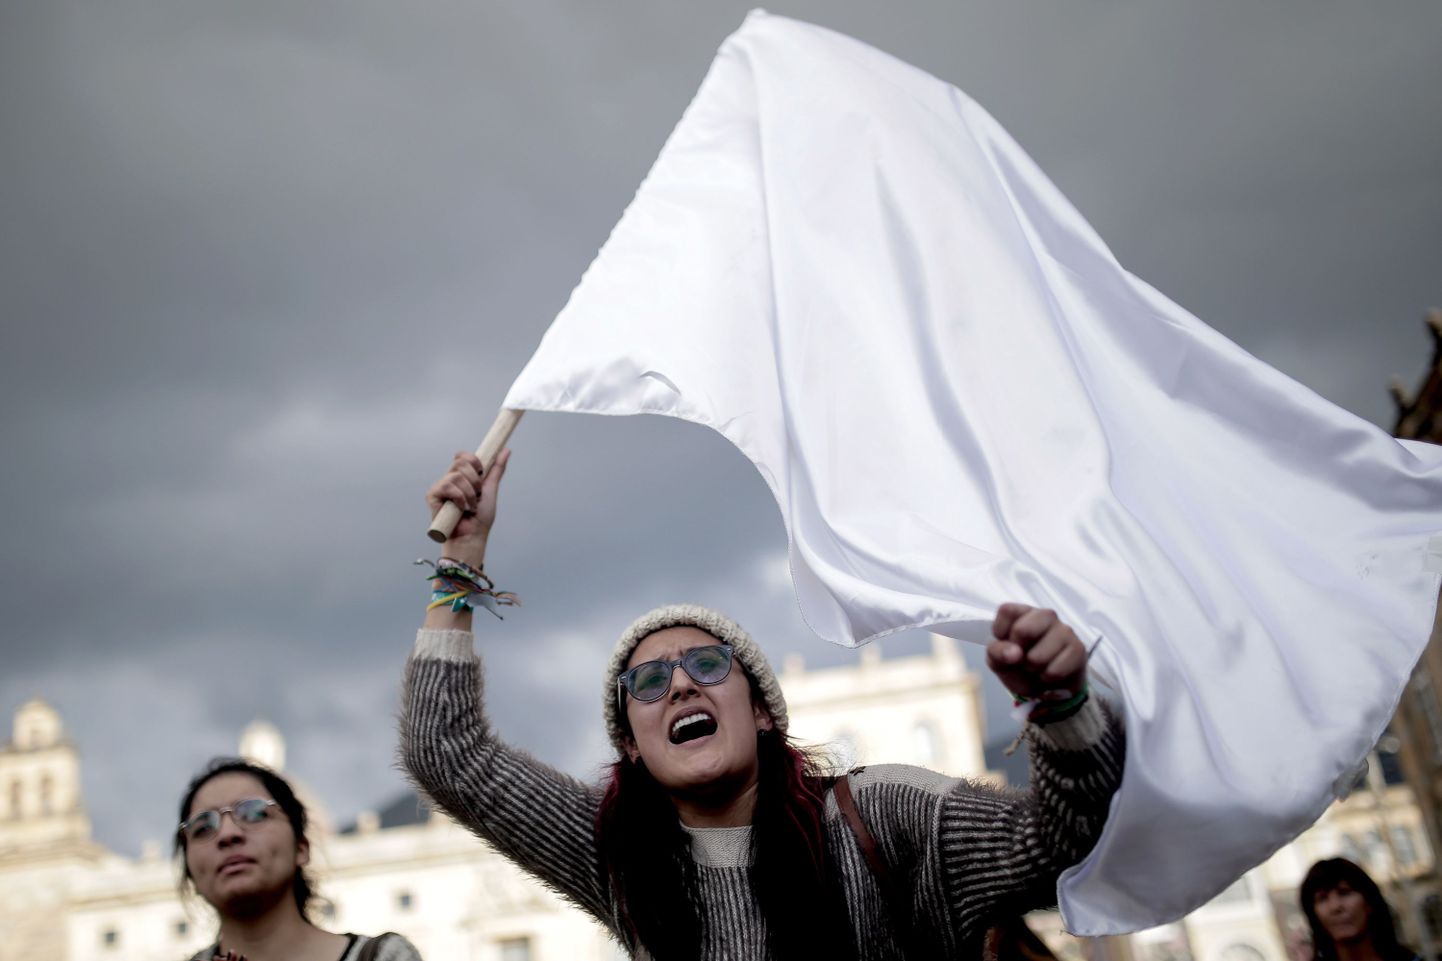 Naine Colombia referendumi tulemuste vastu protestimas.